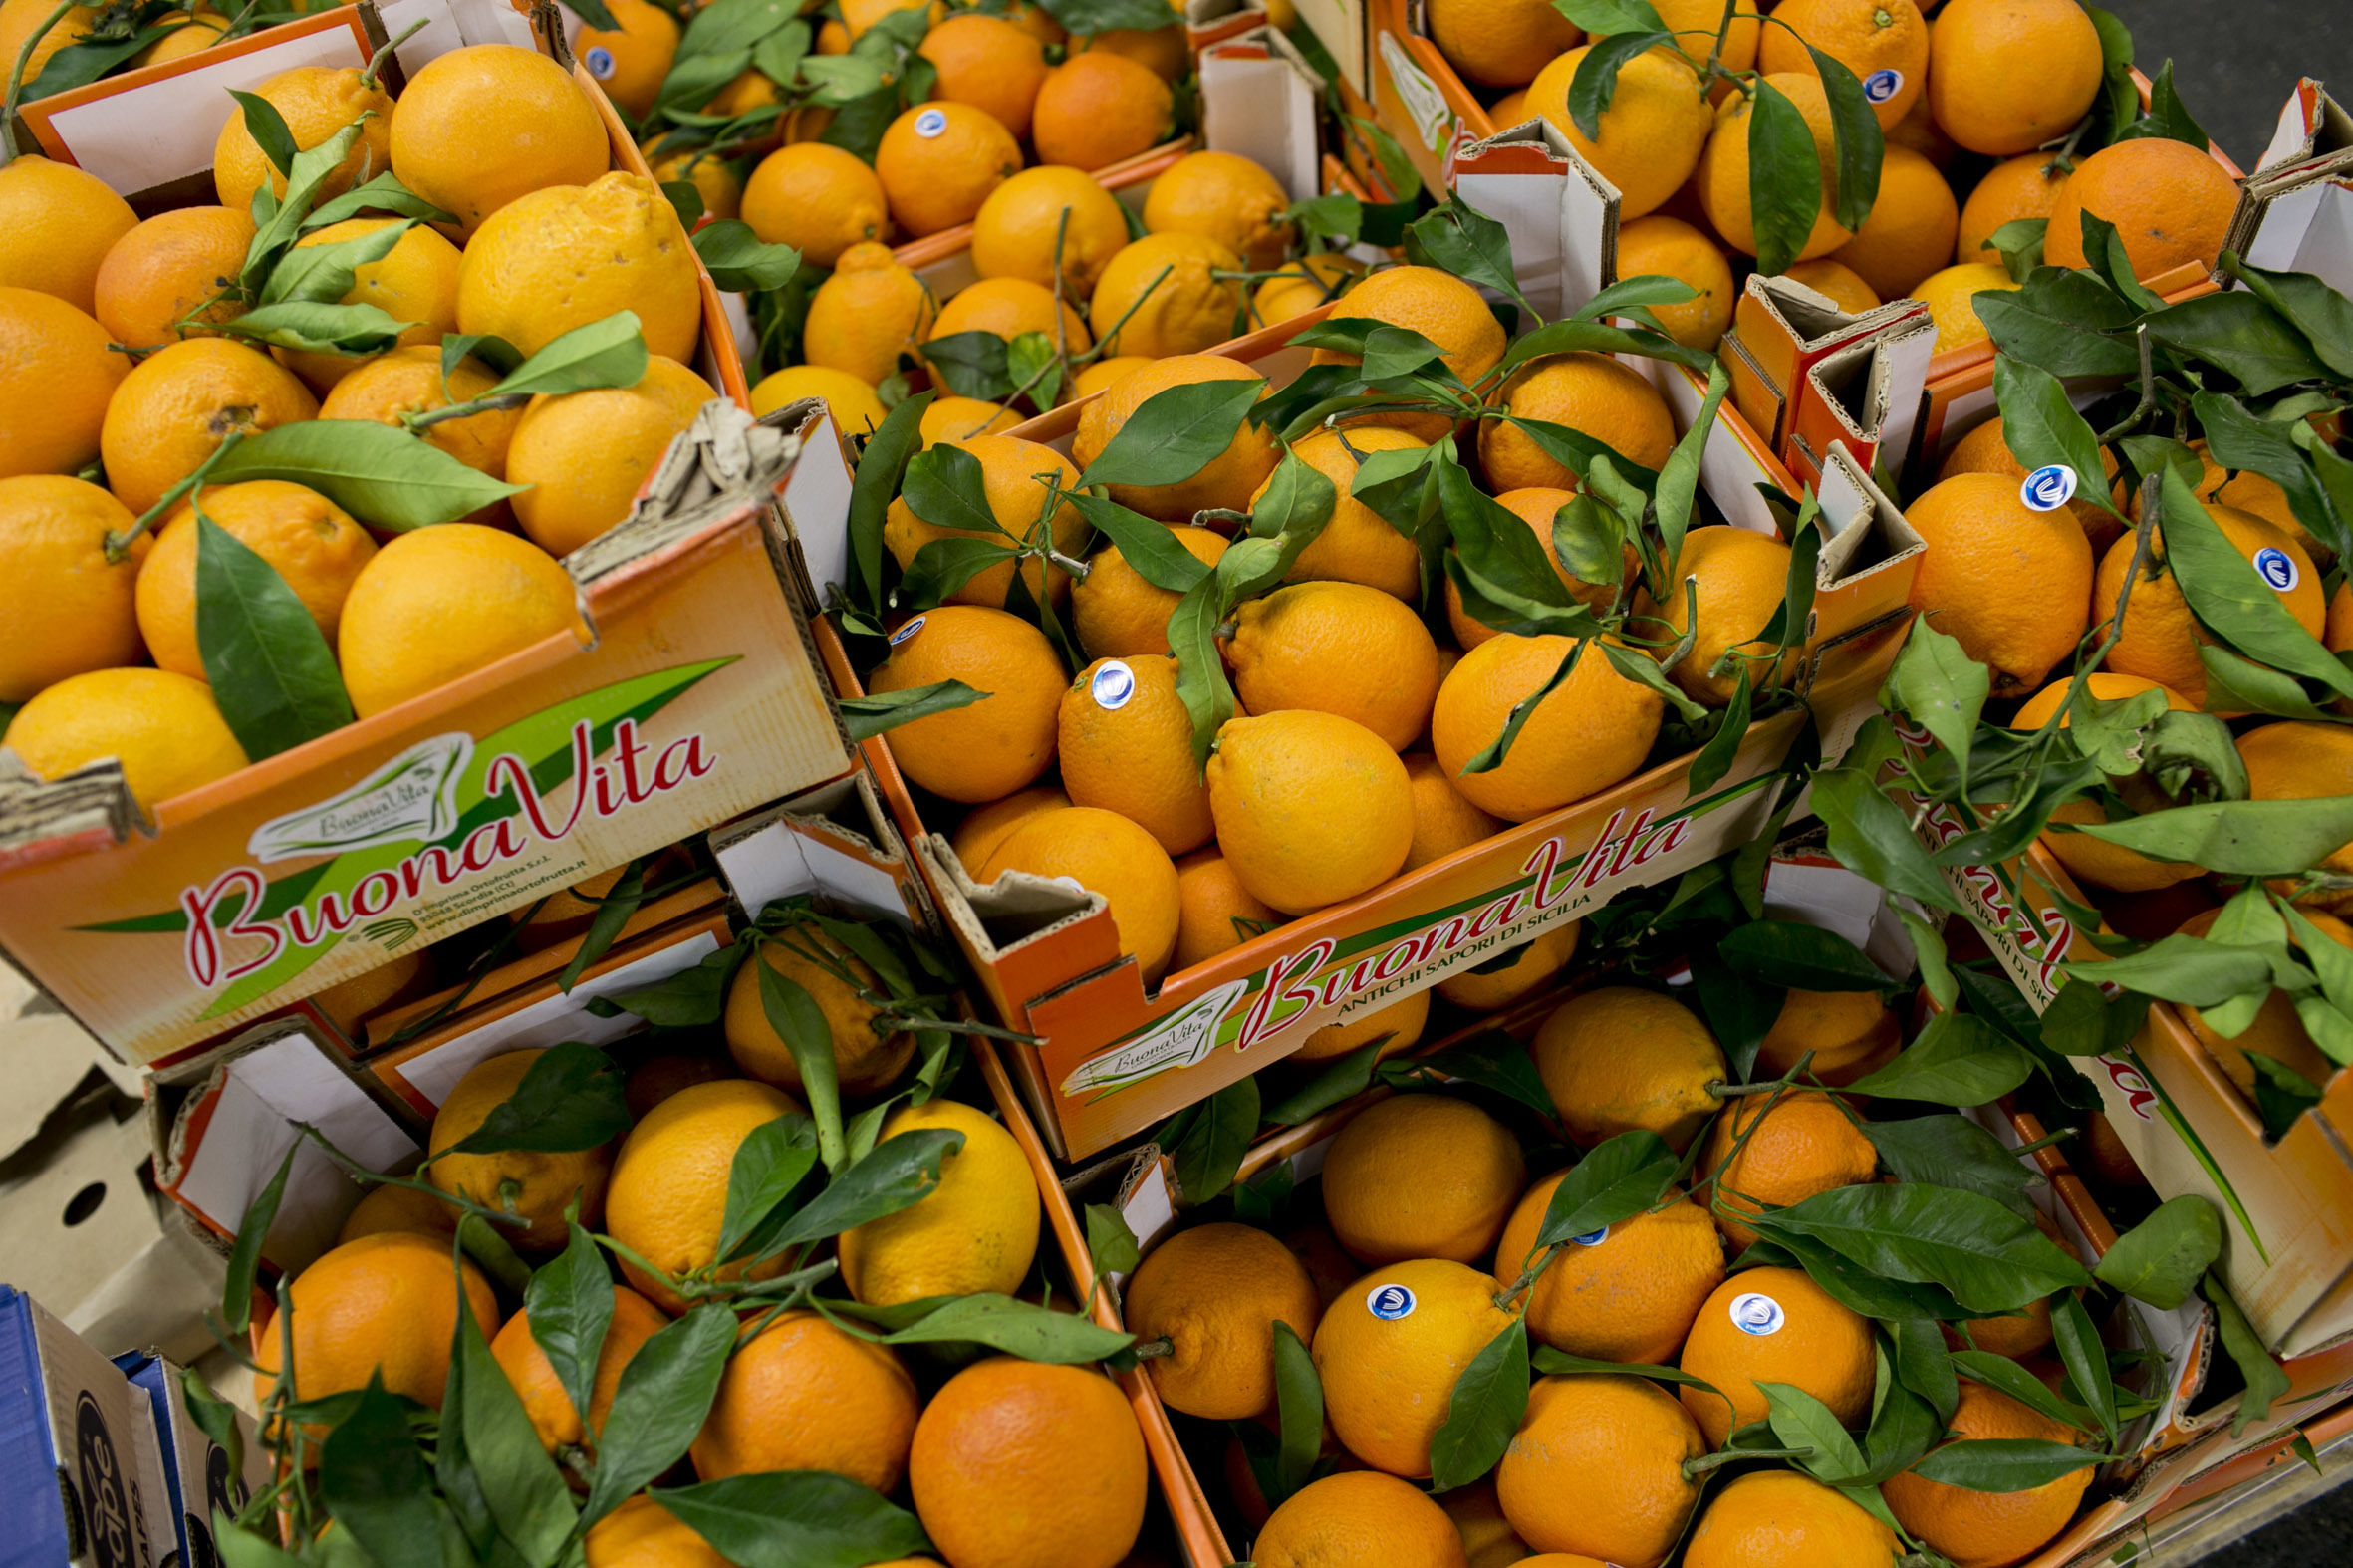 fruit-and-vegetable-market-report-february-2014-tarocco-oranges.jpg?mtime=20170922113434#asset:11356